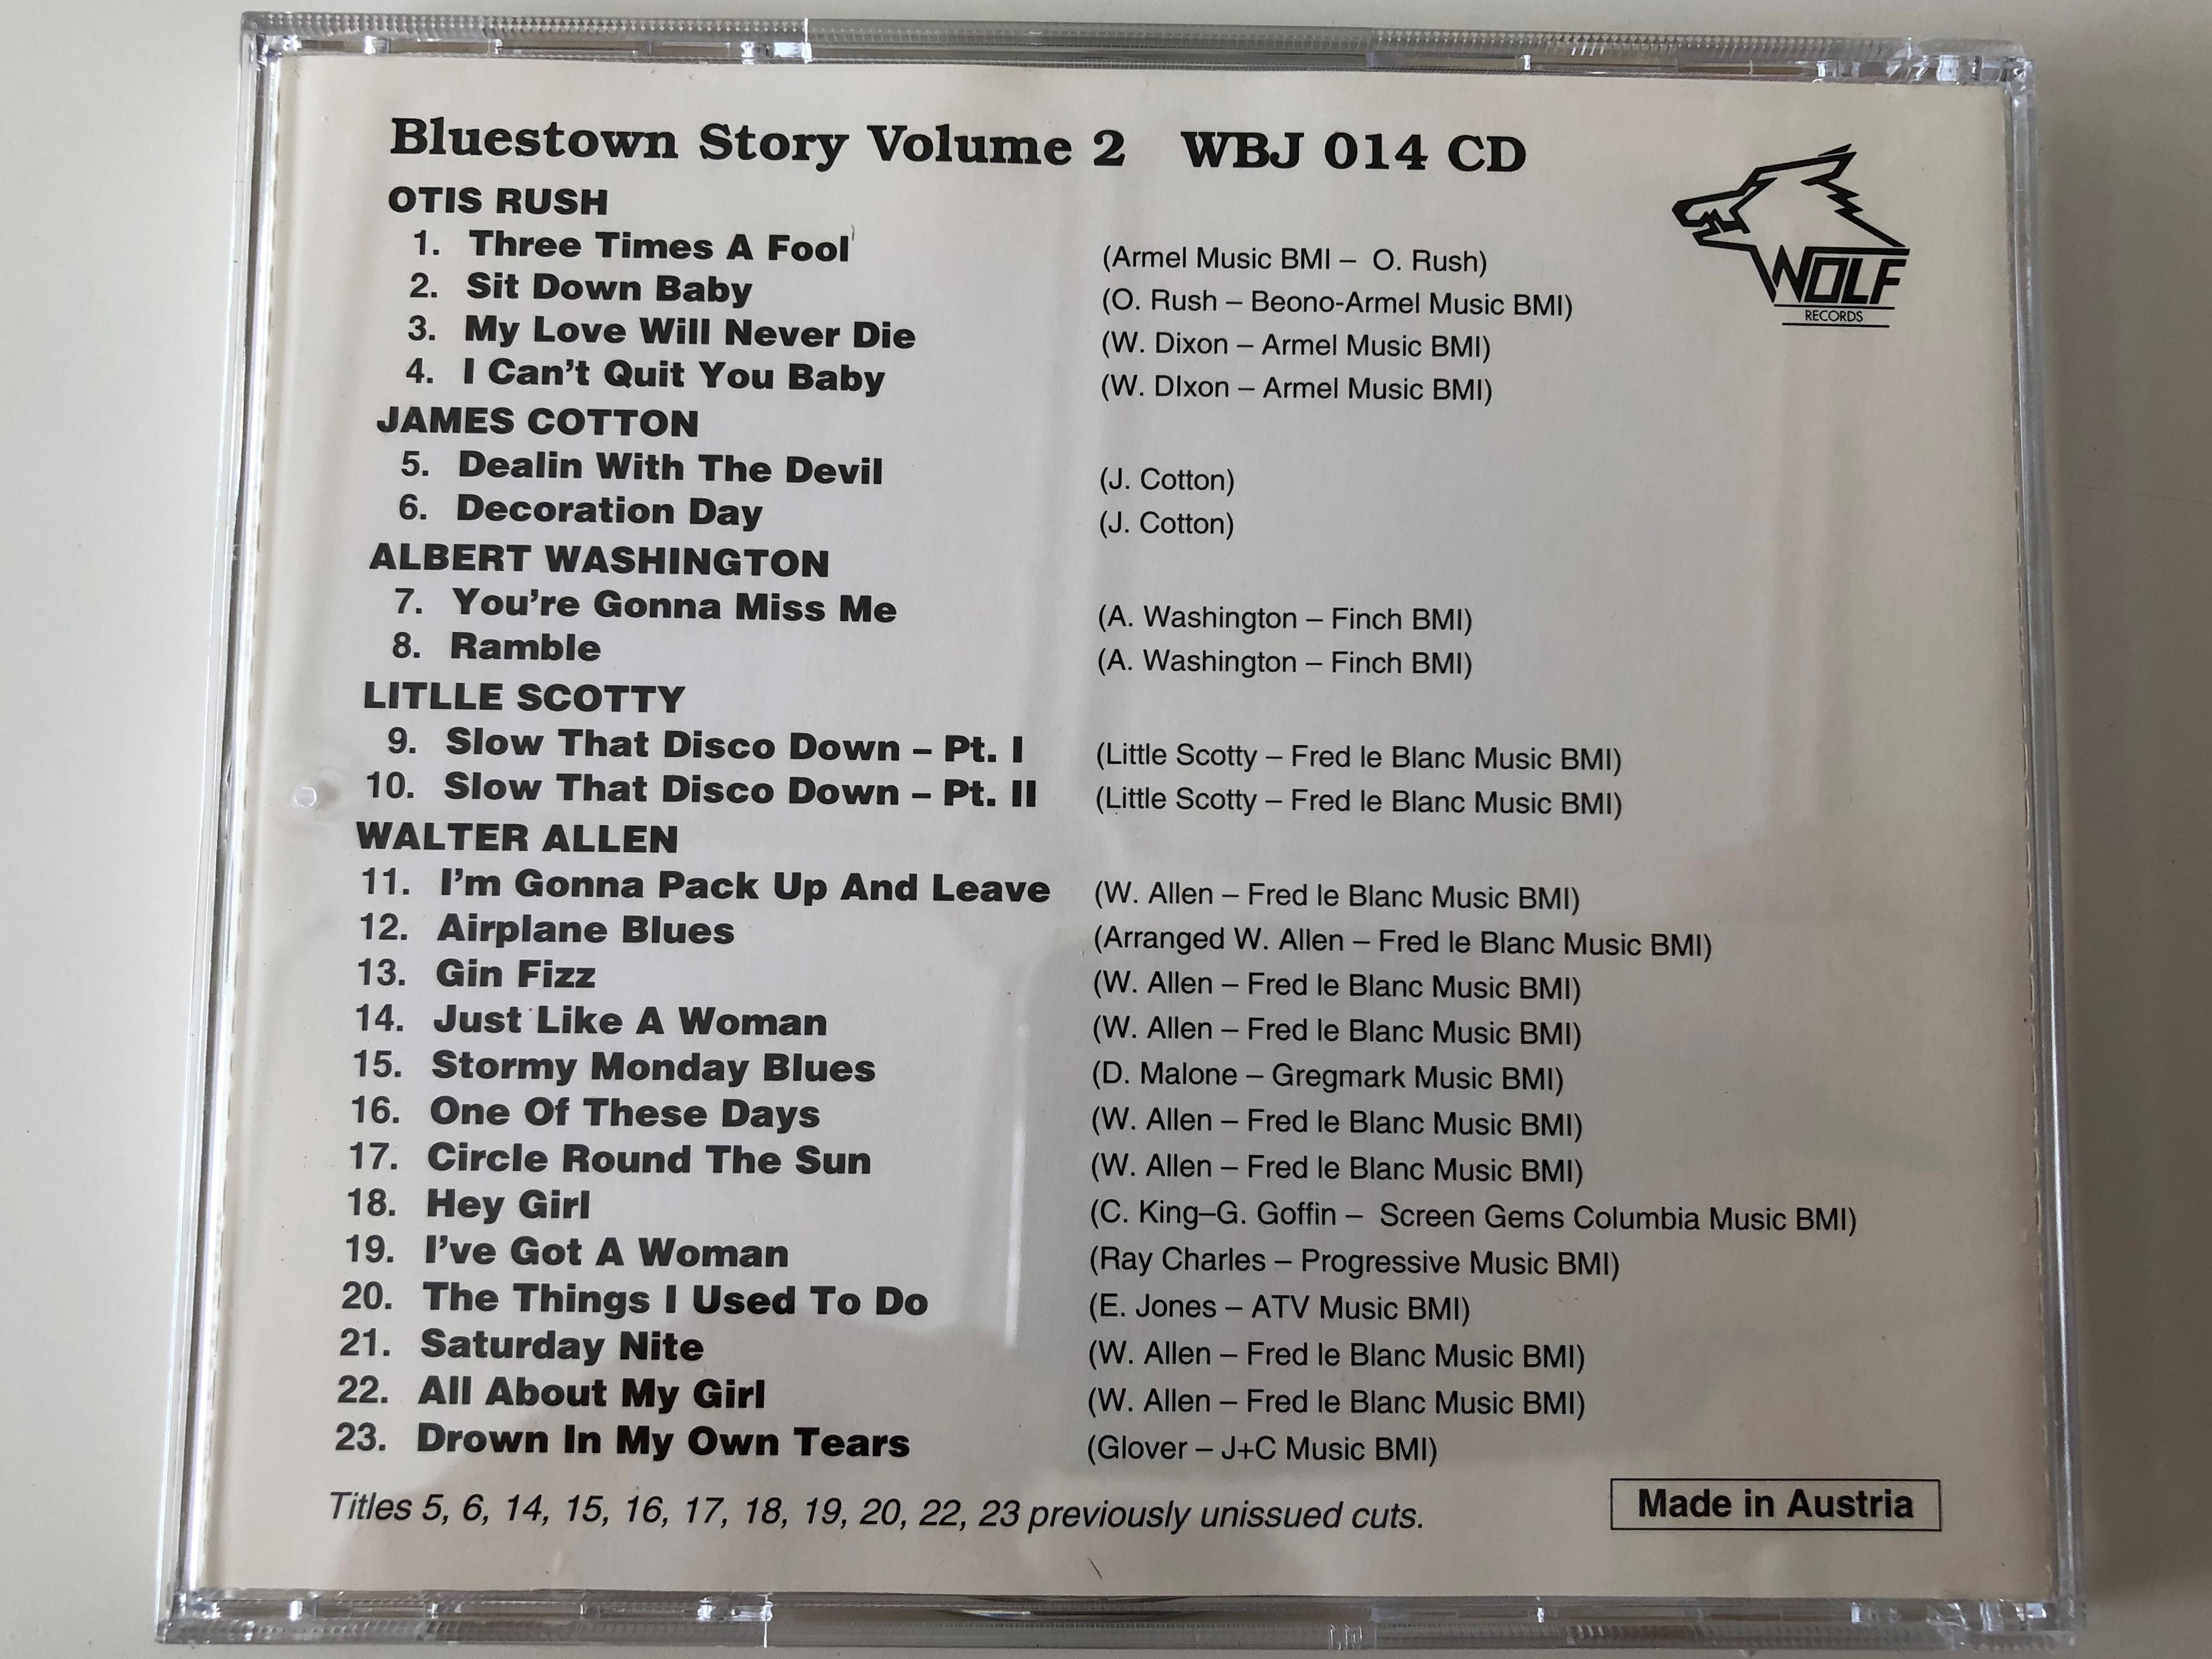 bluestown-story-volume-2-otis-rush-james-cotton-albert-washington-little-scotty-walter-allen-wolf-records-audio-cd-wbj-014-cd-5-.jpg